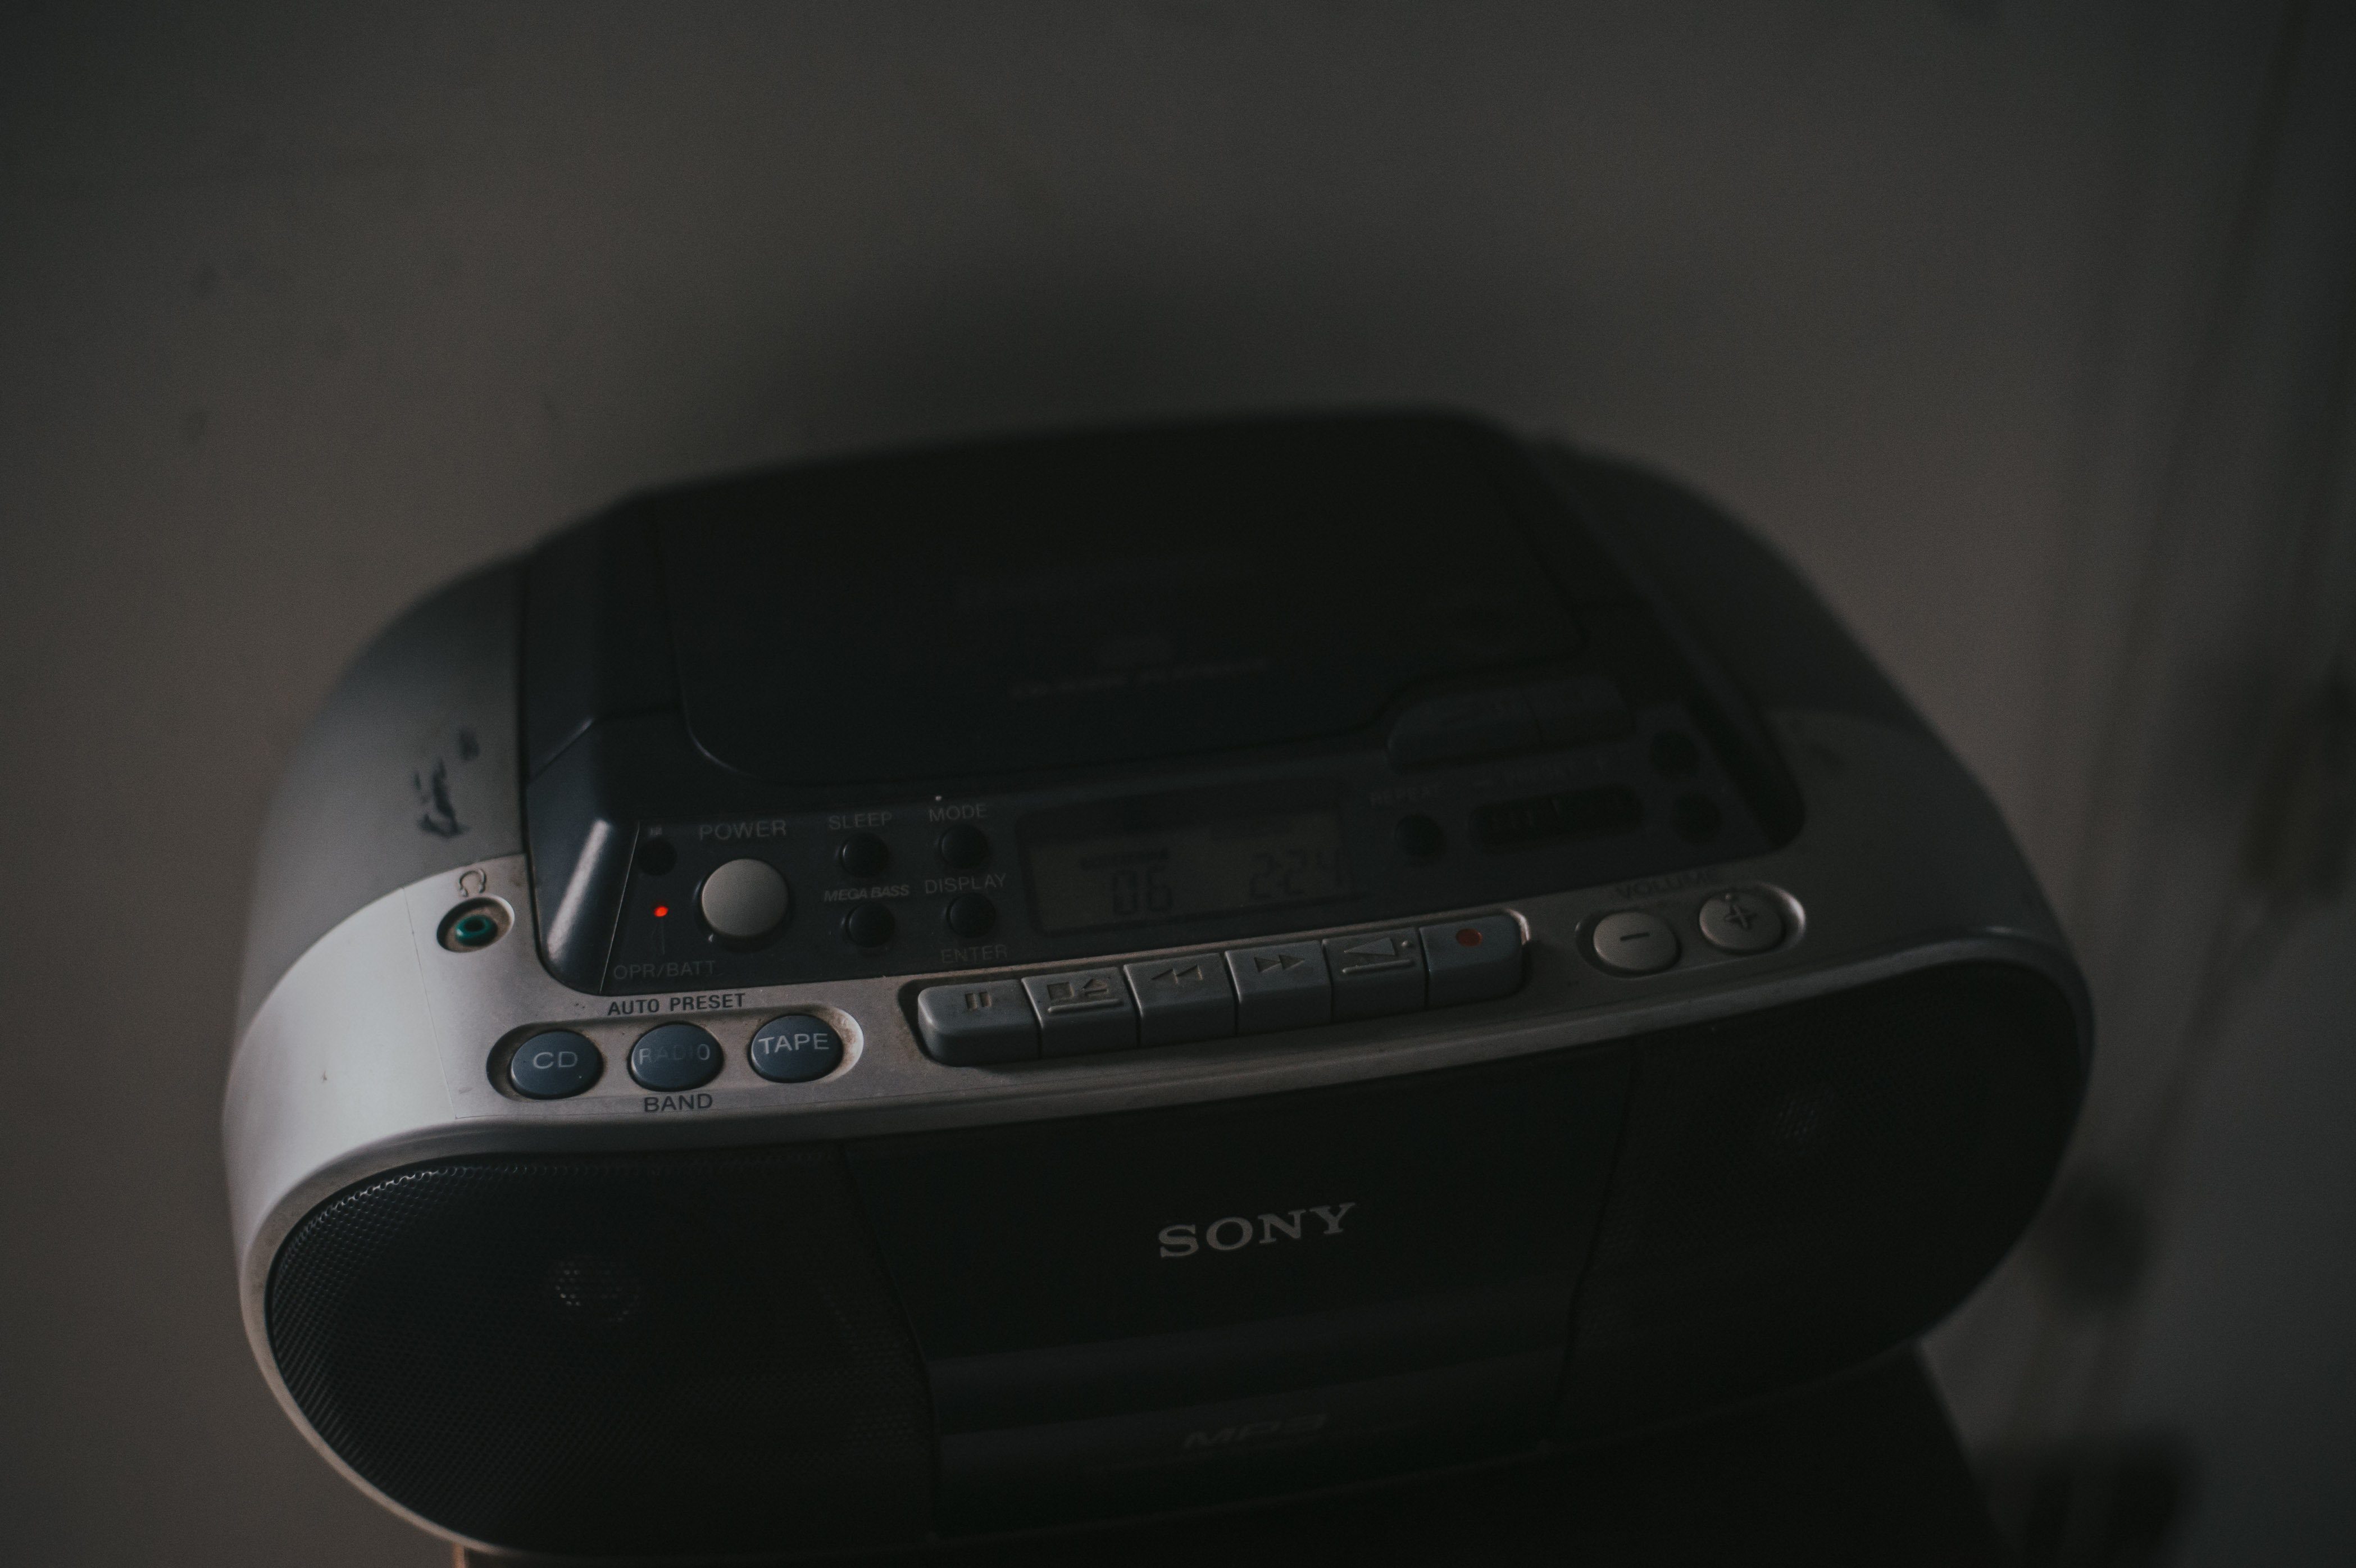 Sony radio cassette player